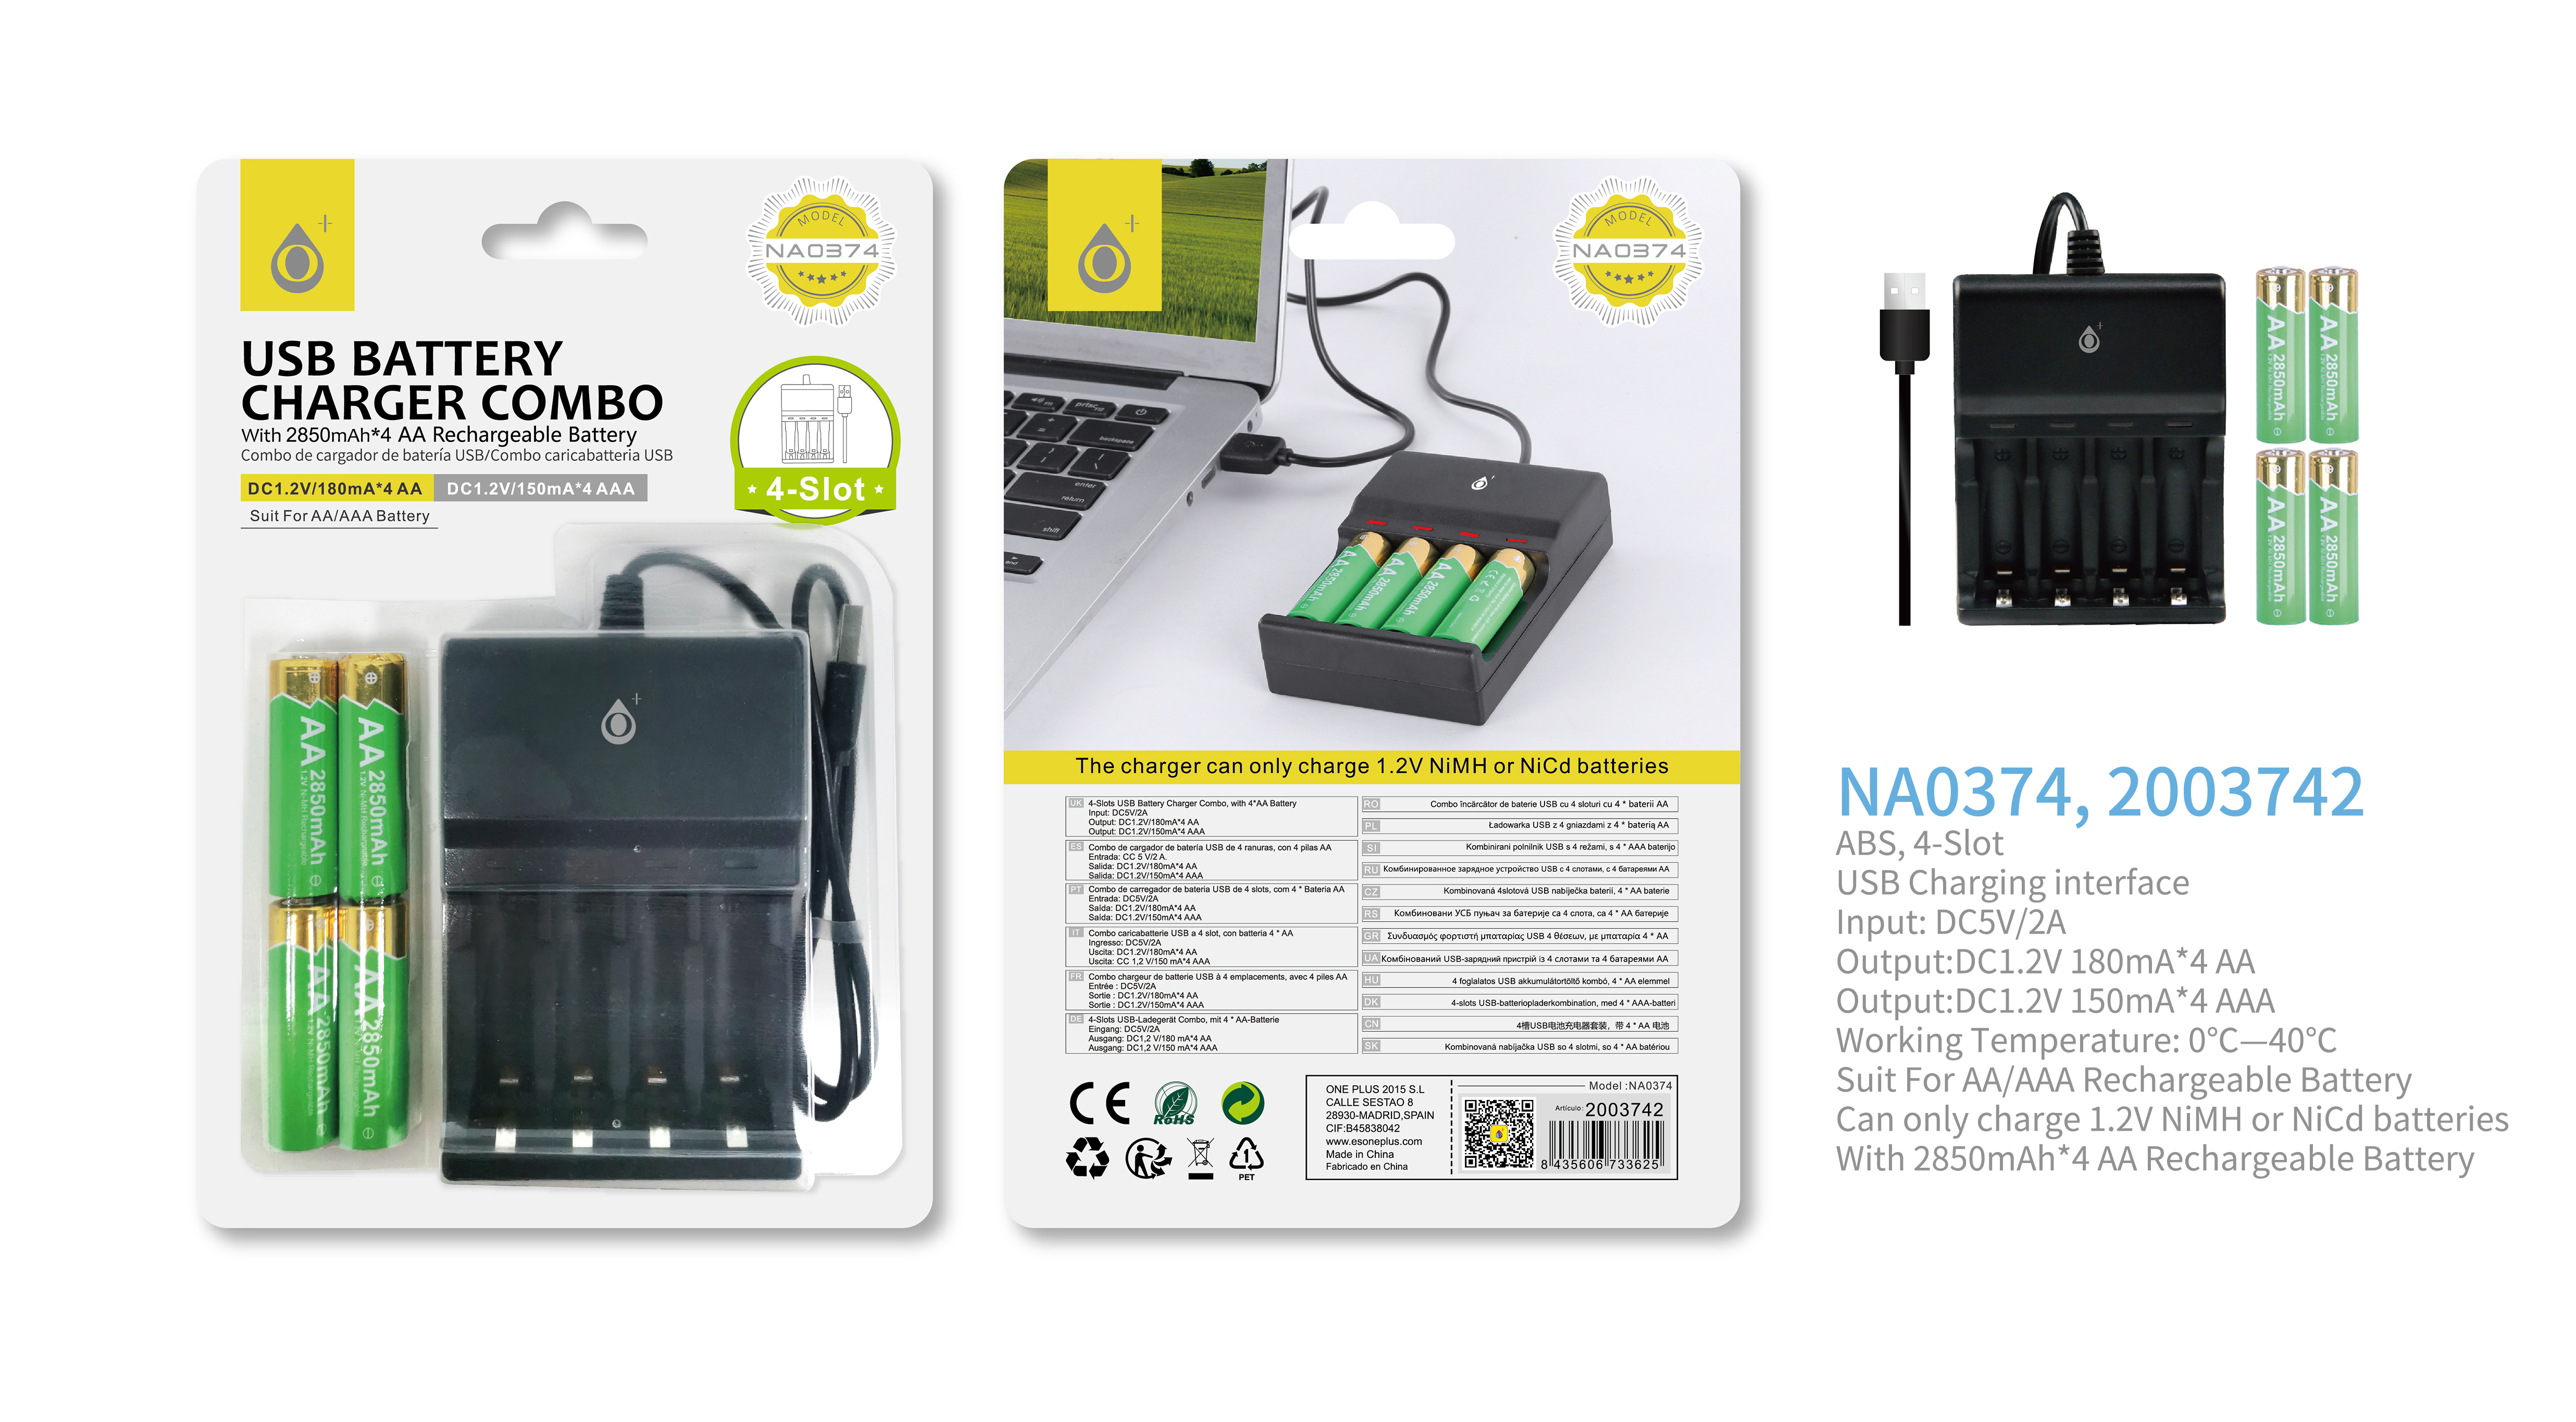 NA0374 Cargador USB de Pilas Ni-MH o NiCd (AA/AAA 1.2V), Incluye 4 Pilas Recargable AA 2850mAh Ni-MH